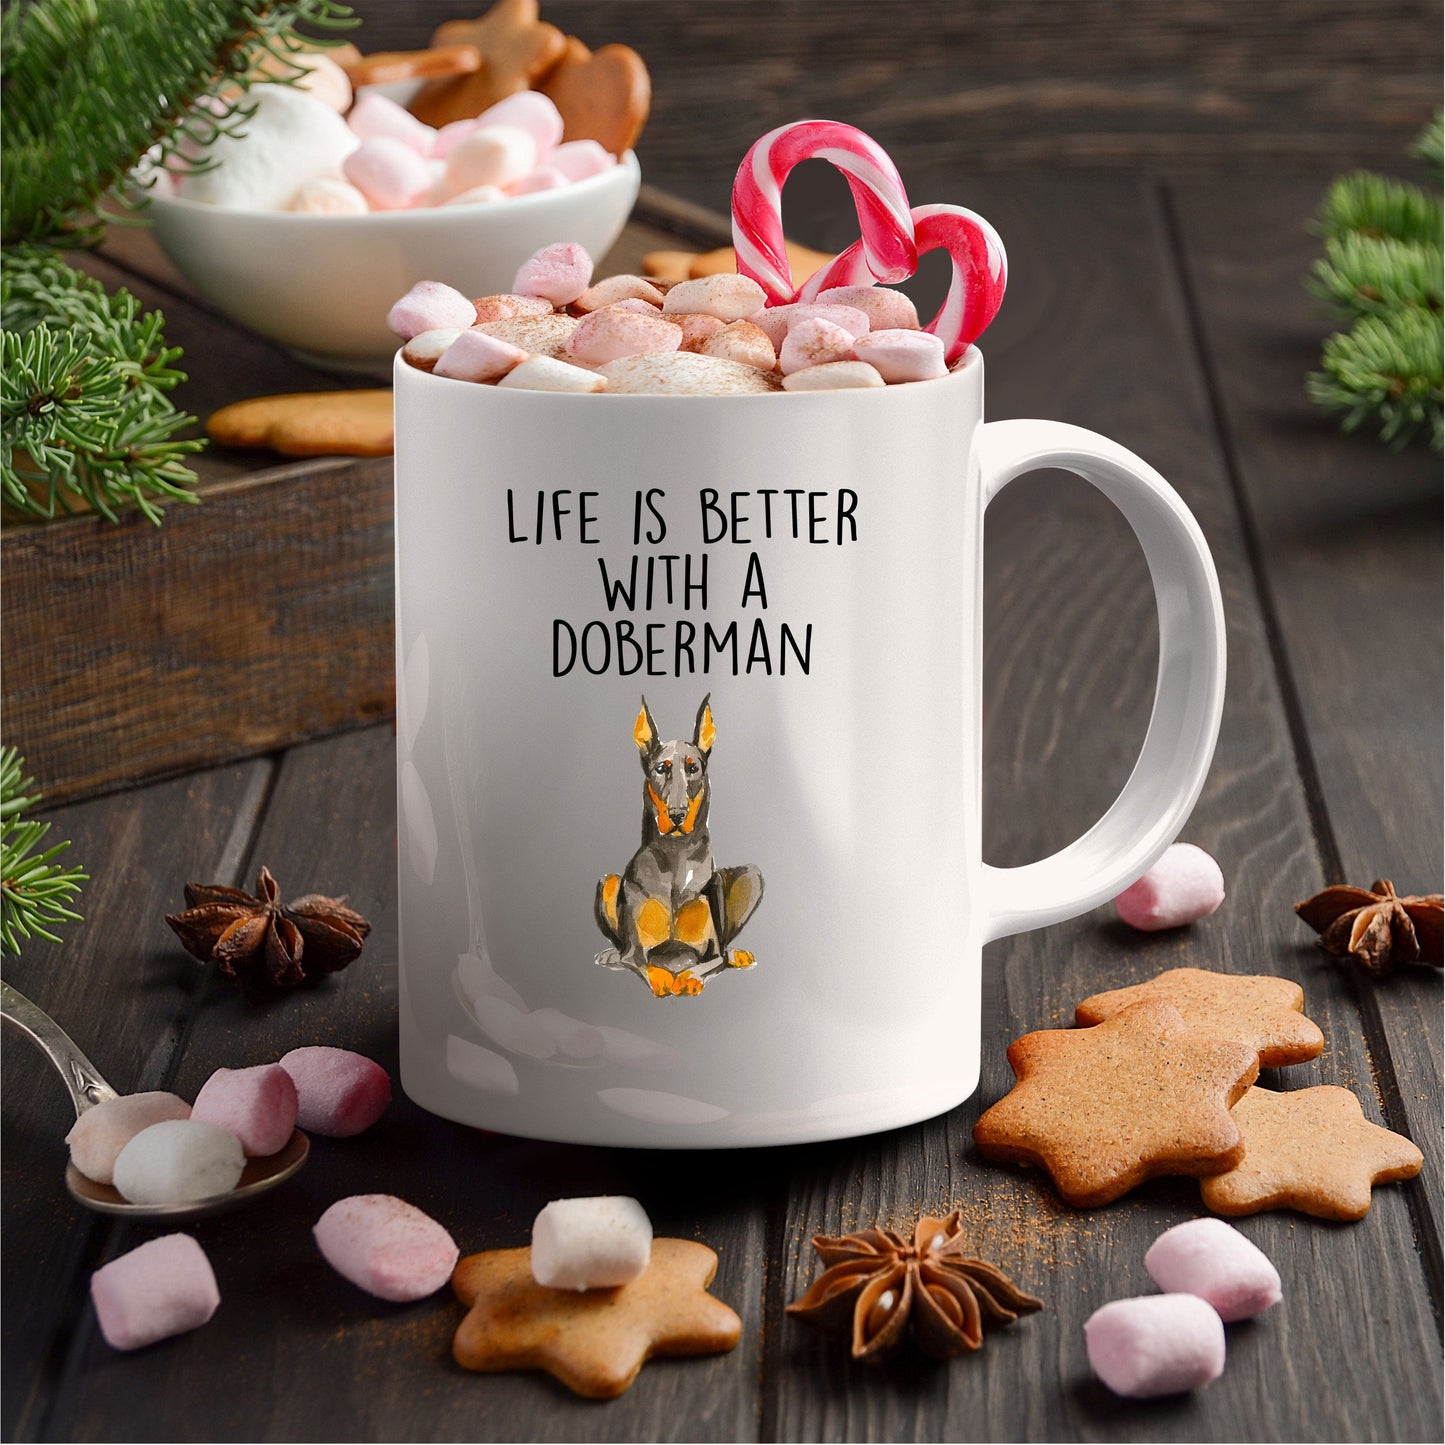 Doberman Pinscher Dog Ceramic Coffee Mug Life is Better